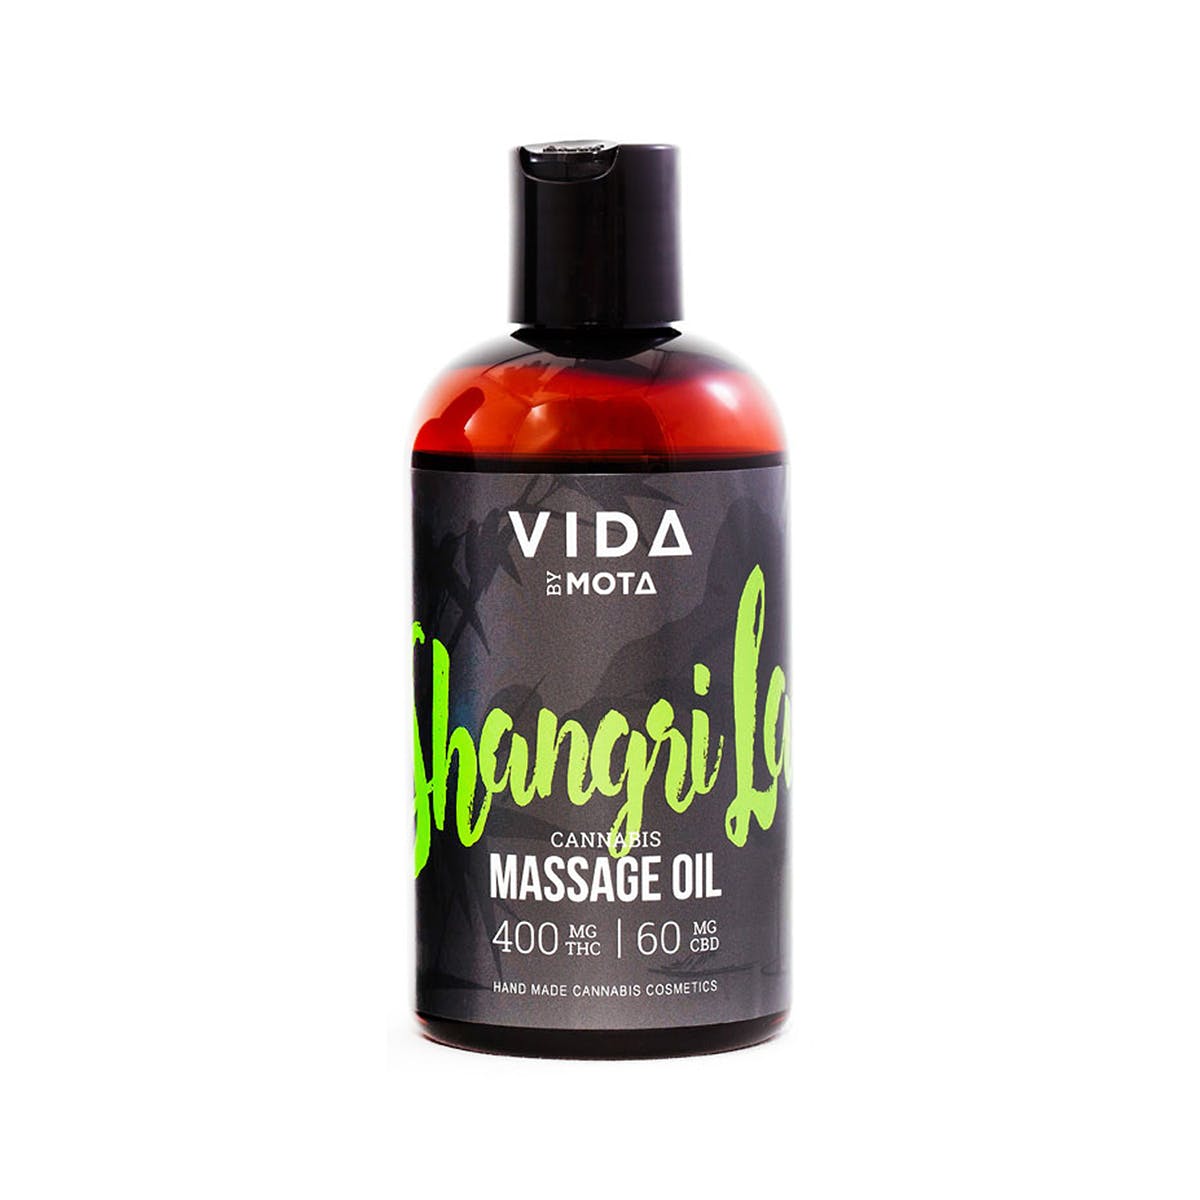 Shangri La Massage Oil